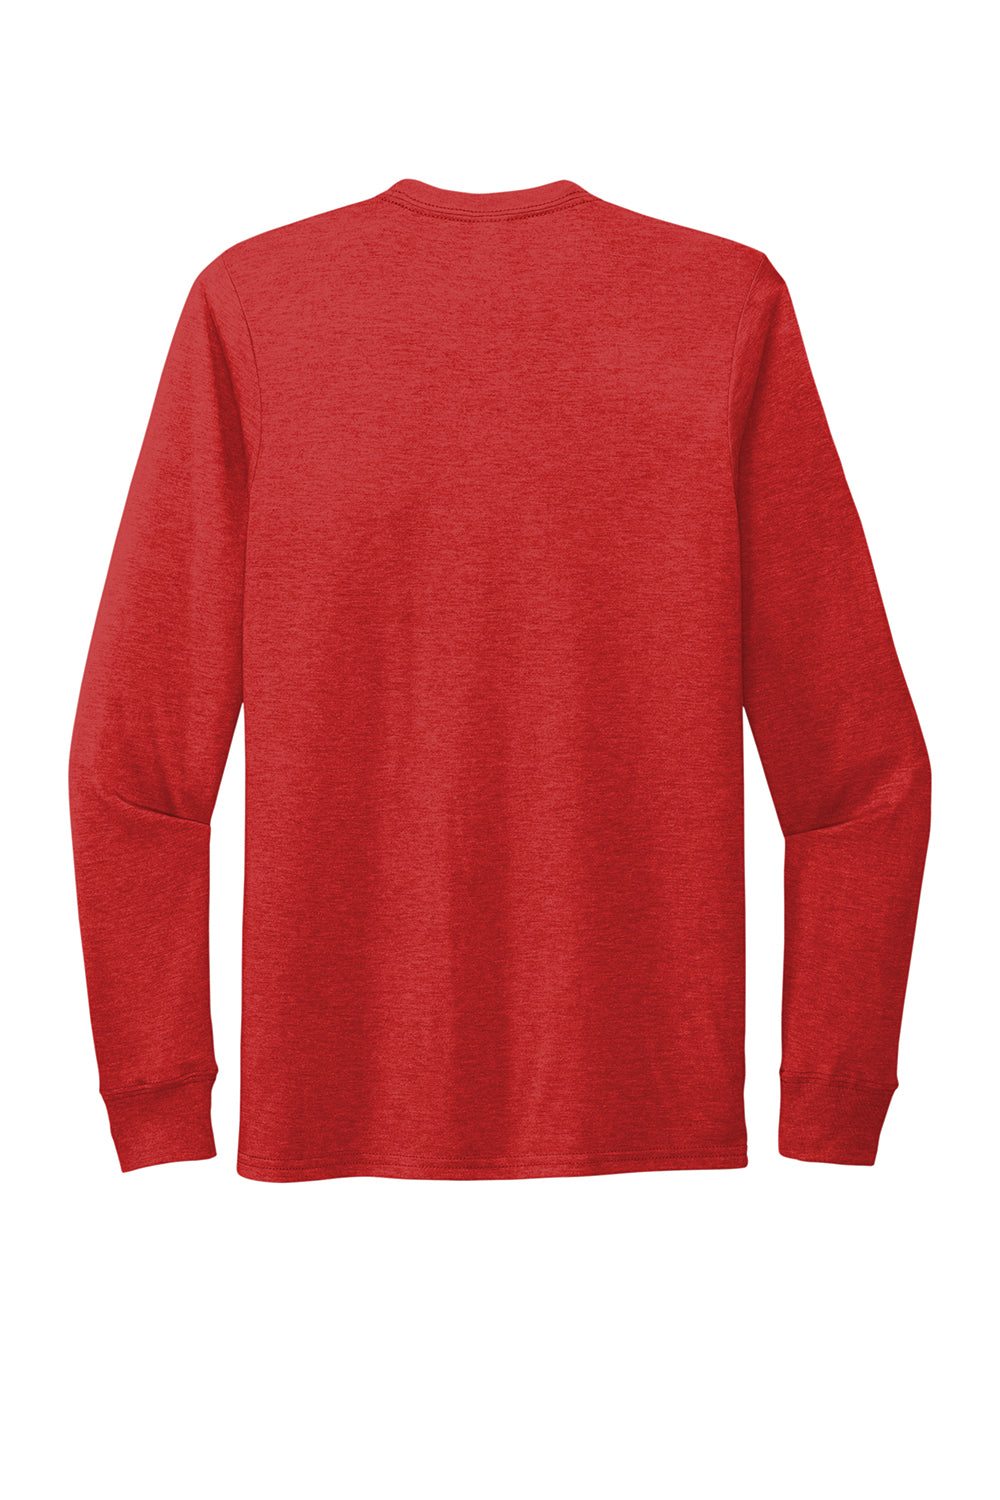 Allmade AL6004 Mens Long Sleeve Crewneck T-Shirt Rise Up Red Flat Back